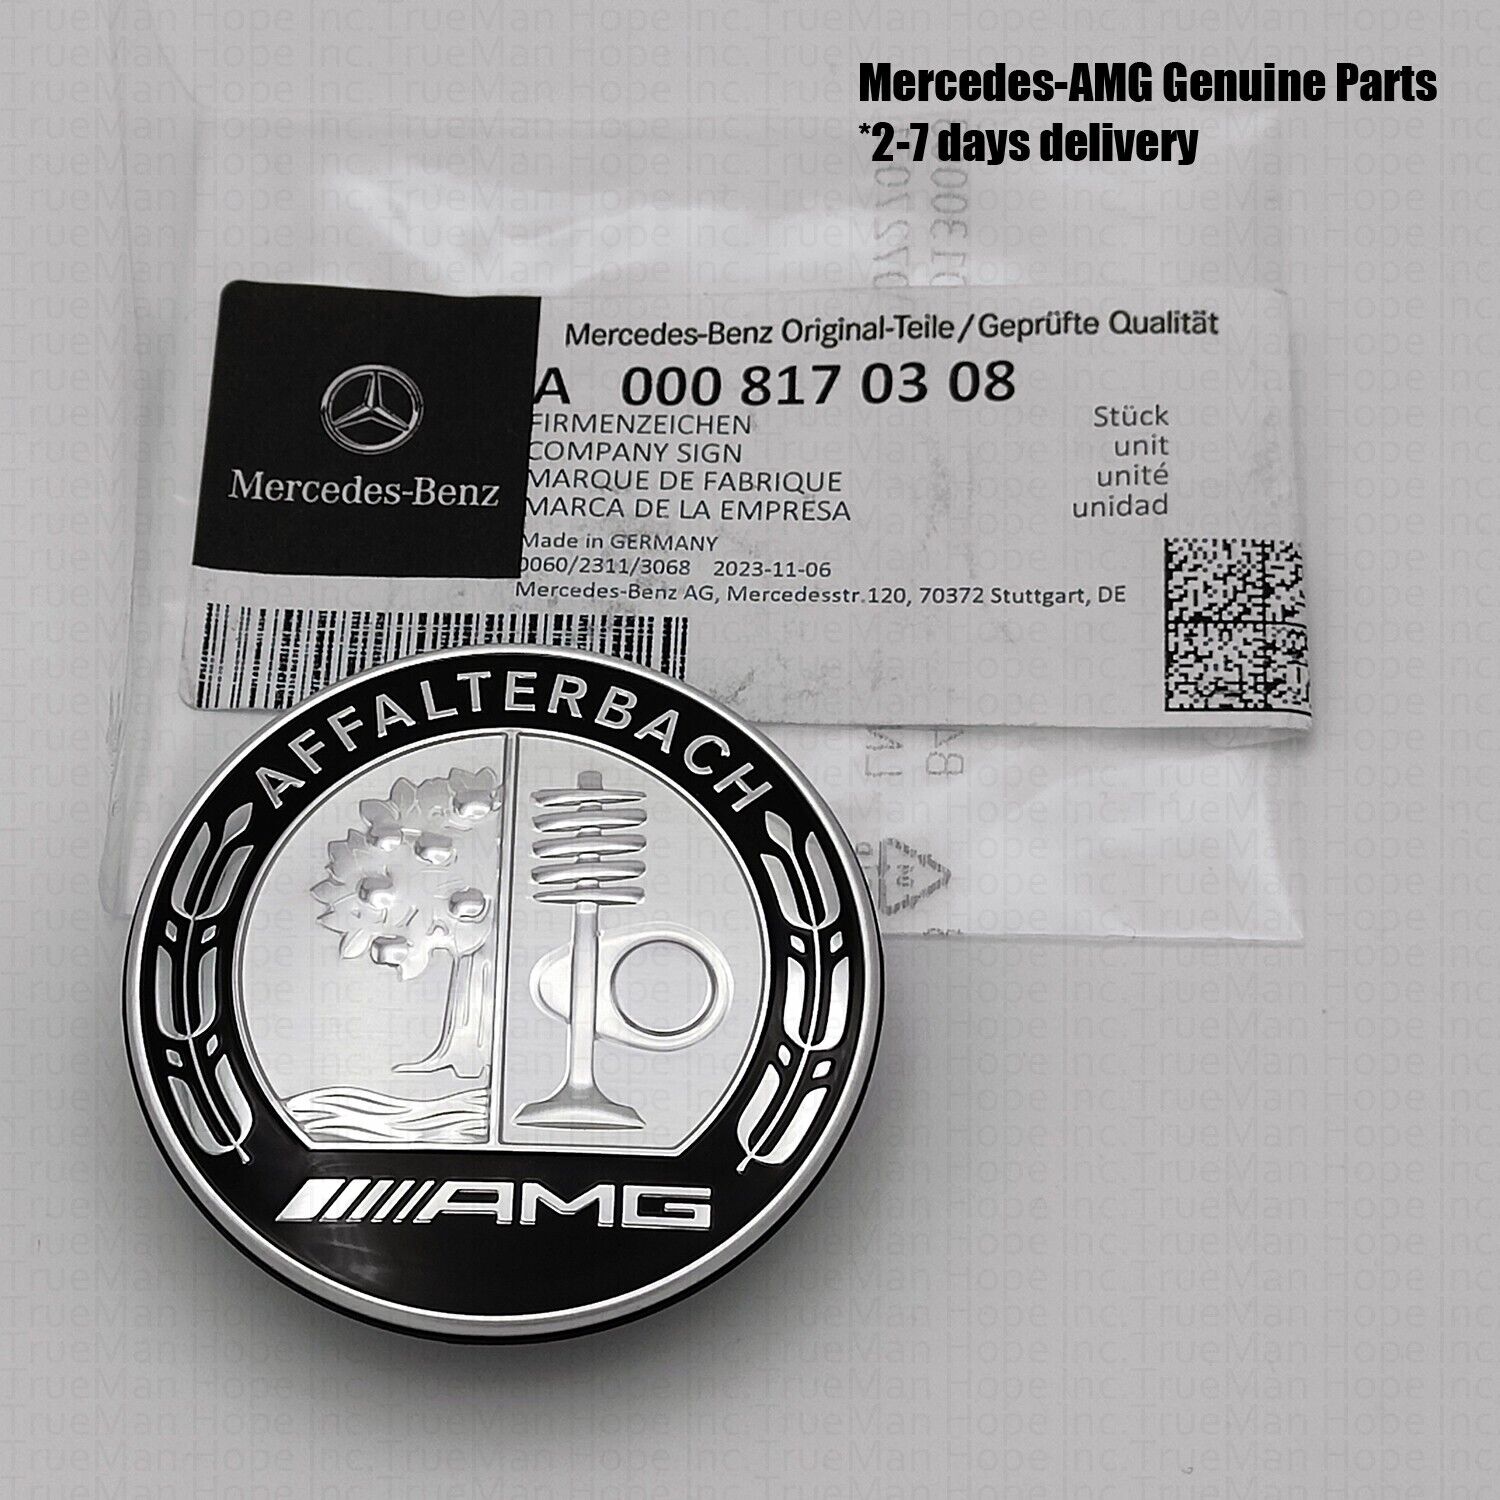 Genuine Mercedes-AMG Affalterbach 254 Engine Hood Emblem / Badge 0008170308